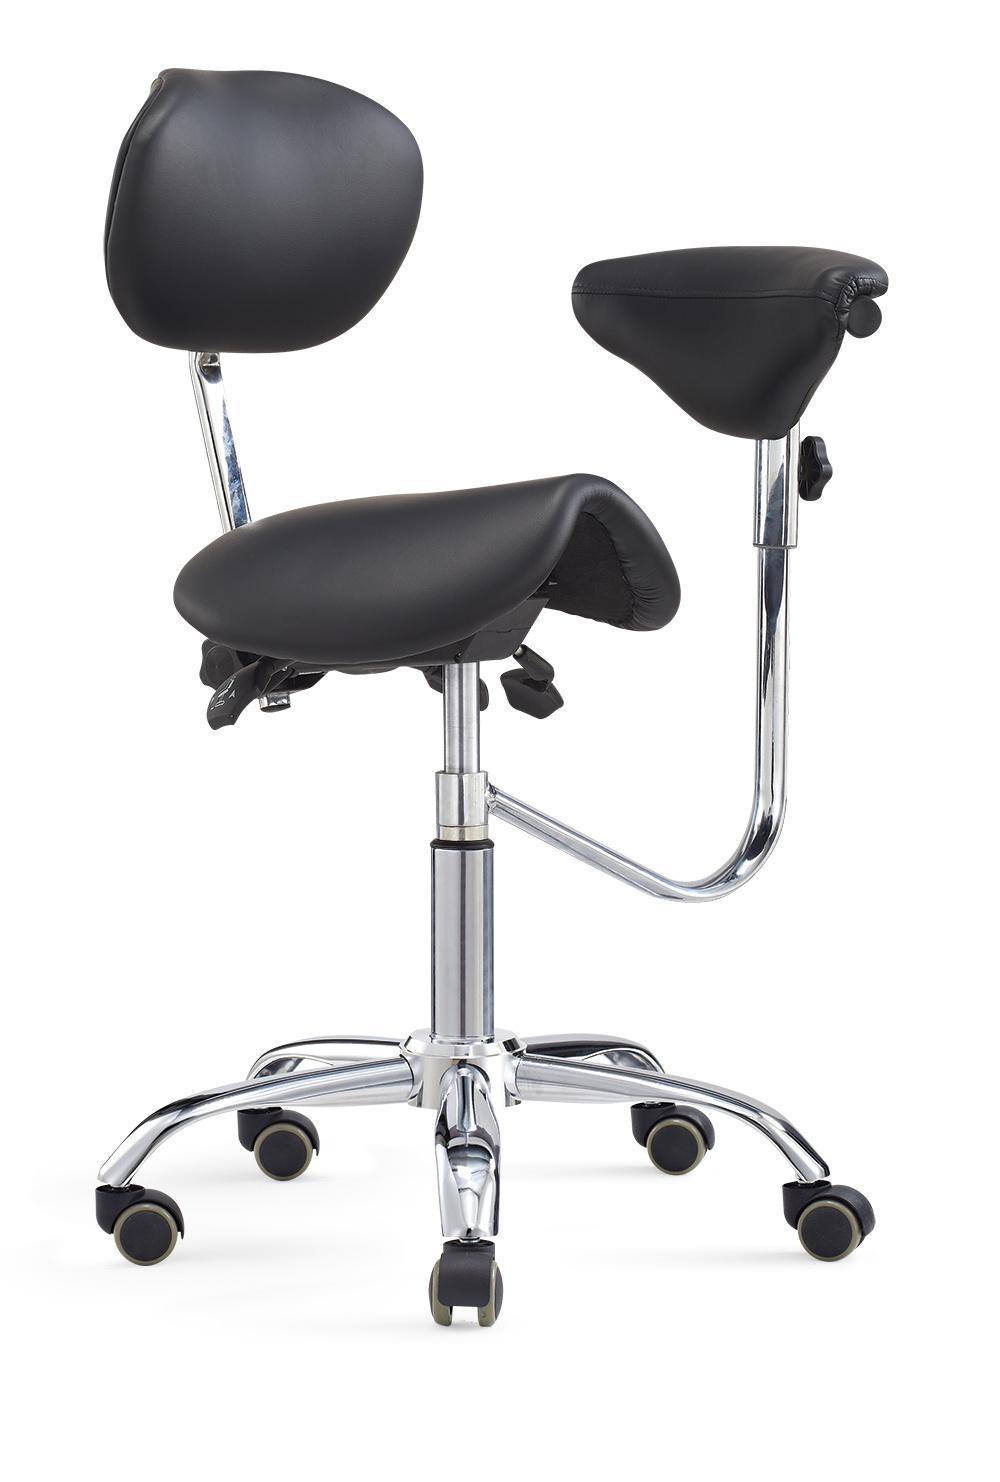 New Split Saddle Stool Dental Assistant Medical Chair with Swivel Armrest